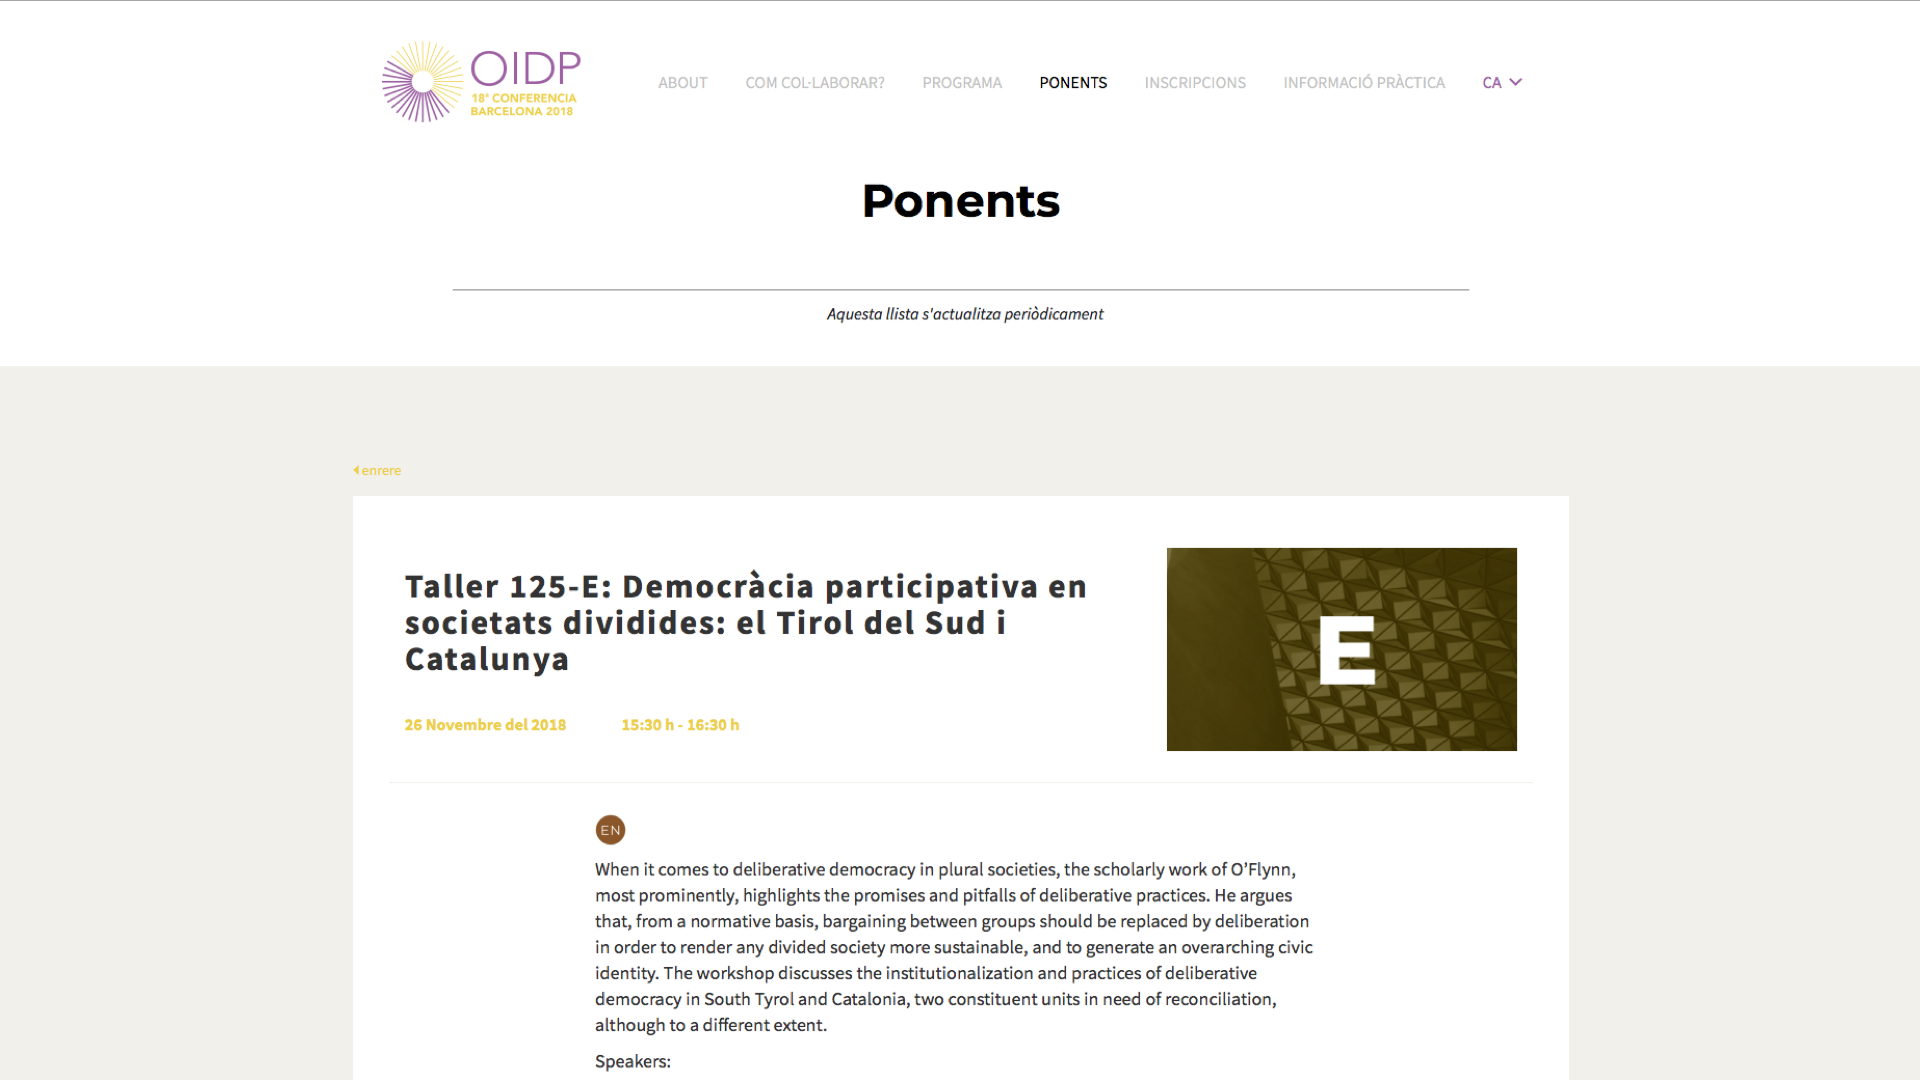 OIDP web platform section 2